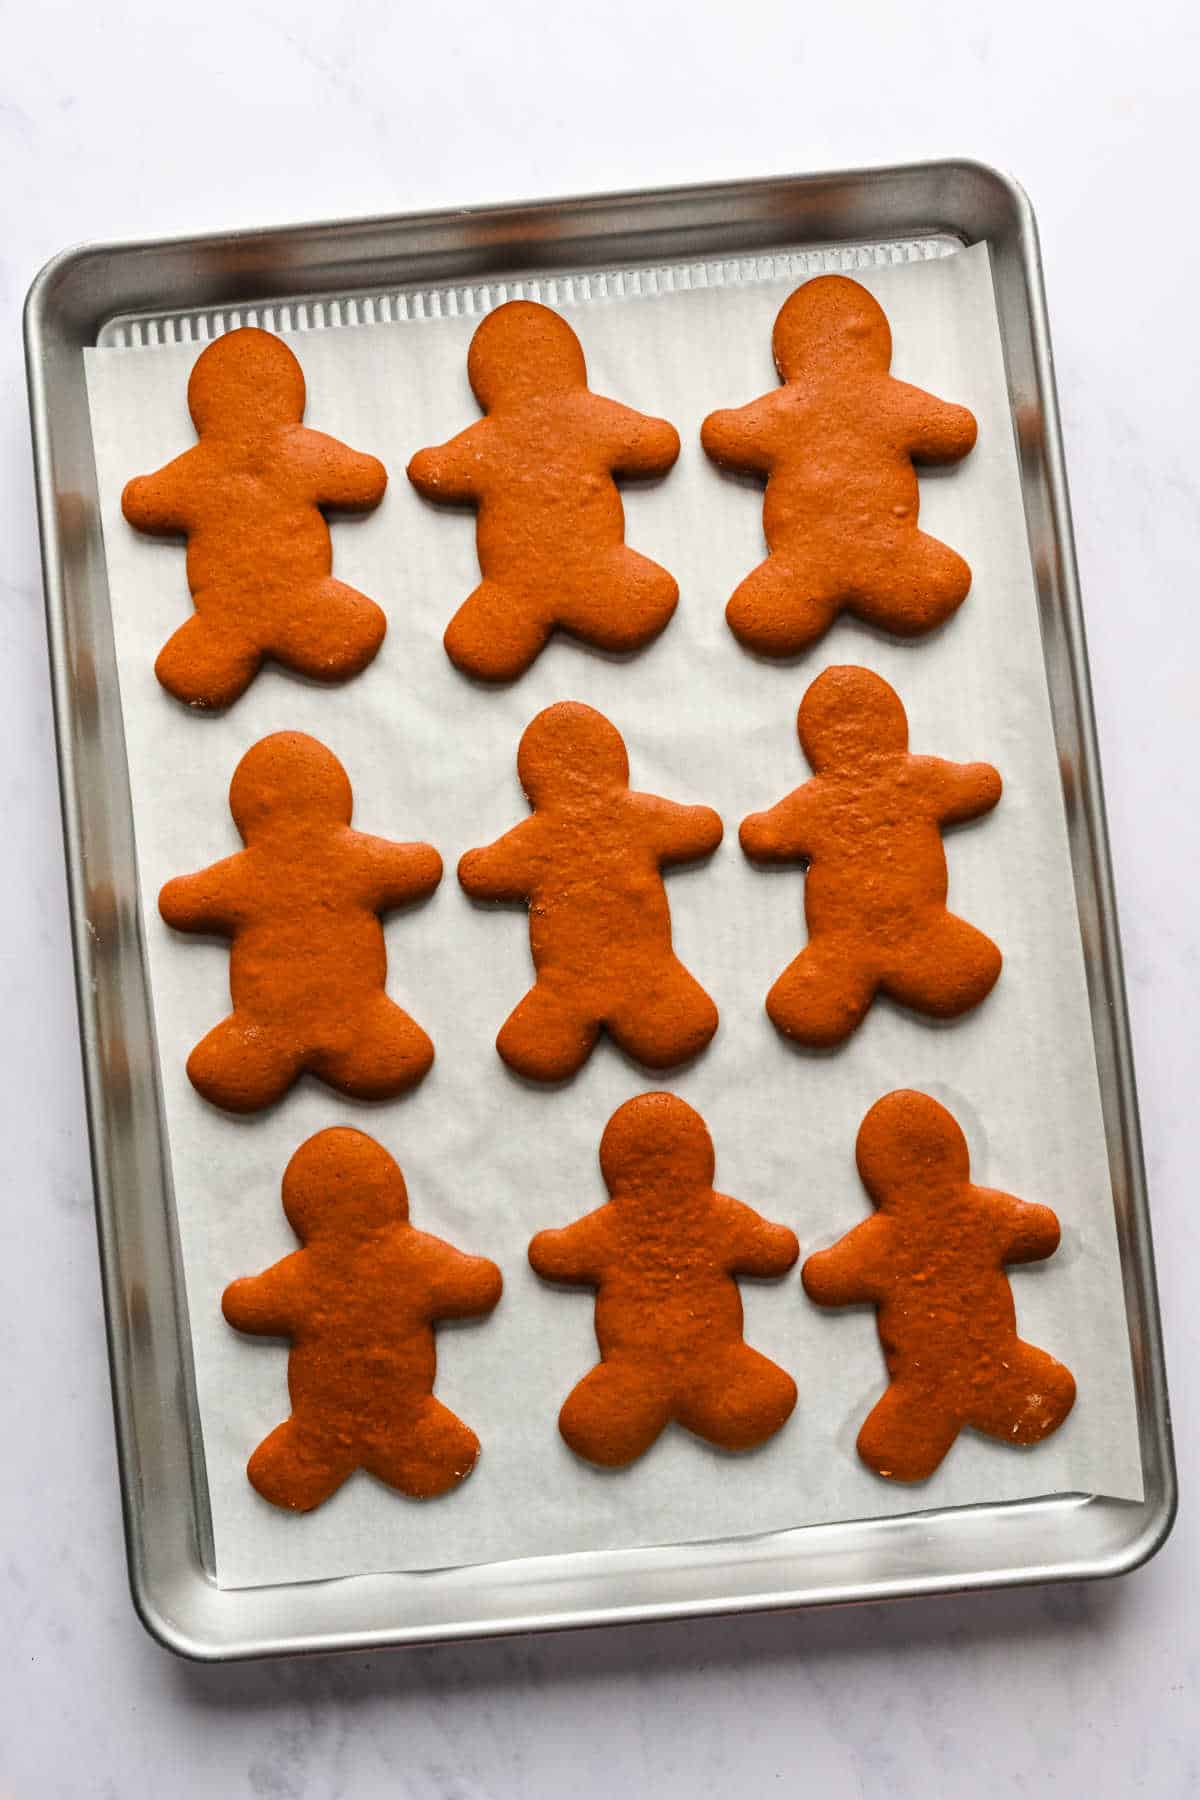 Baked gingerbread men on a baking sheet. 